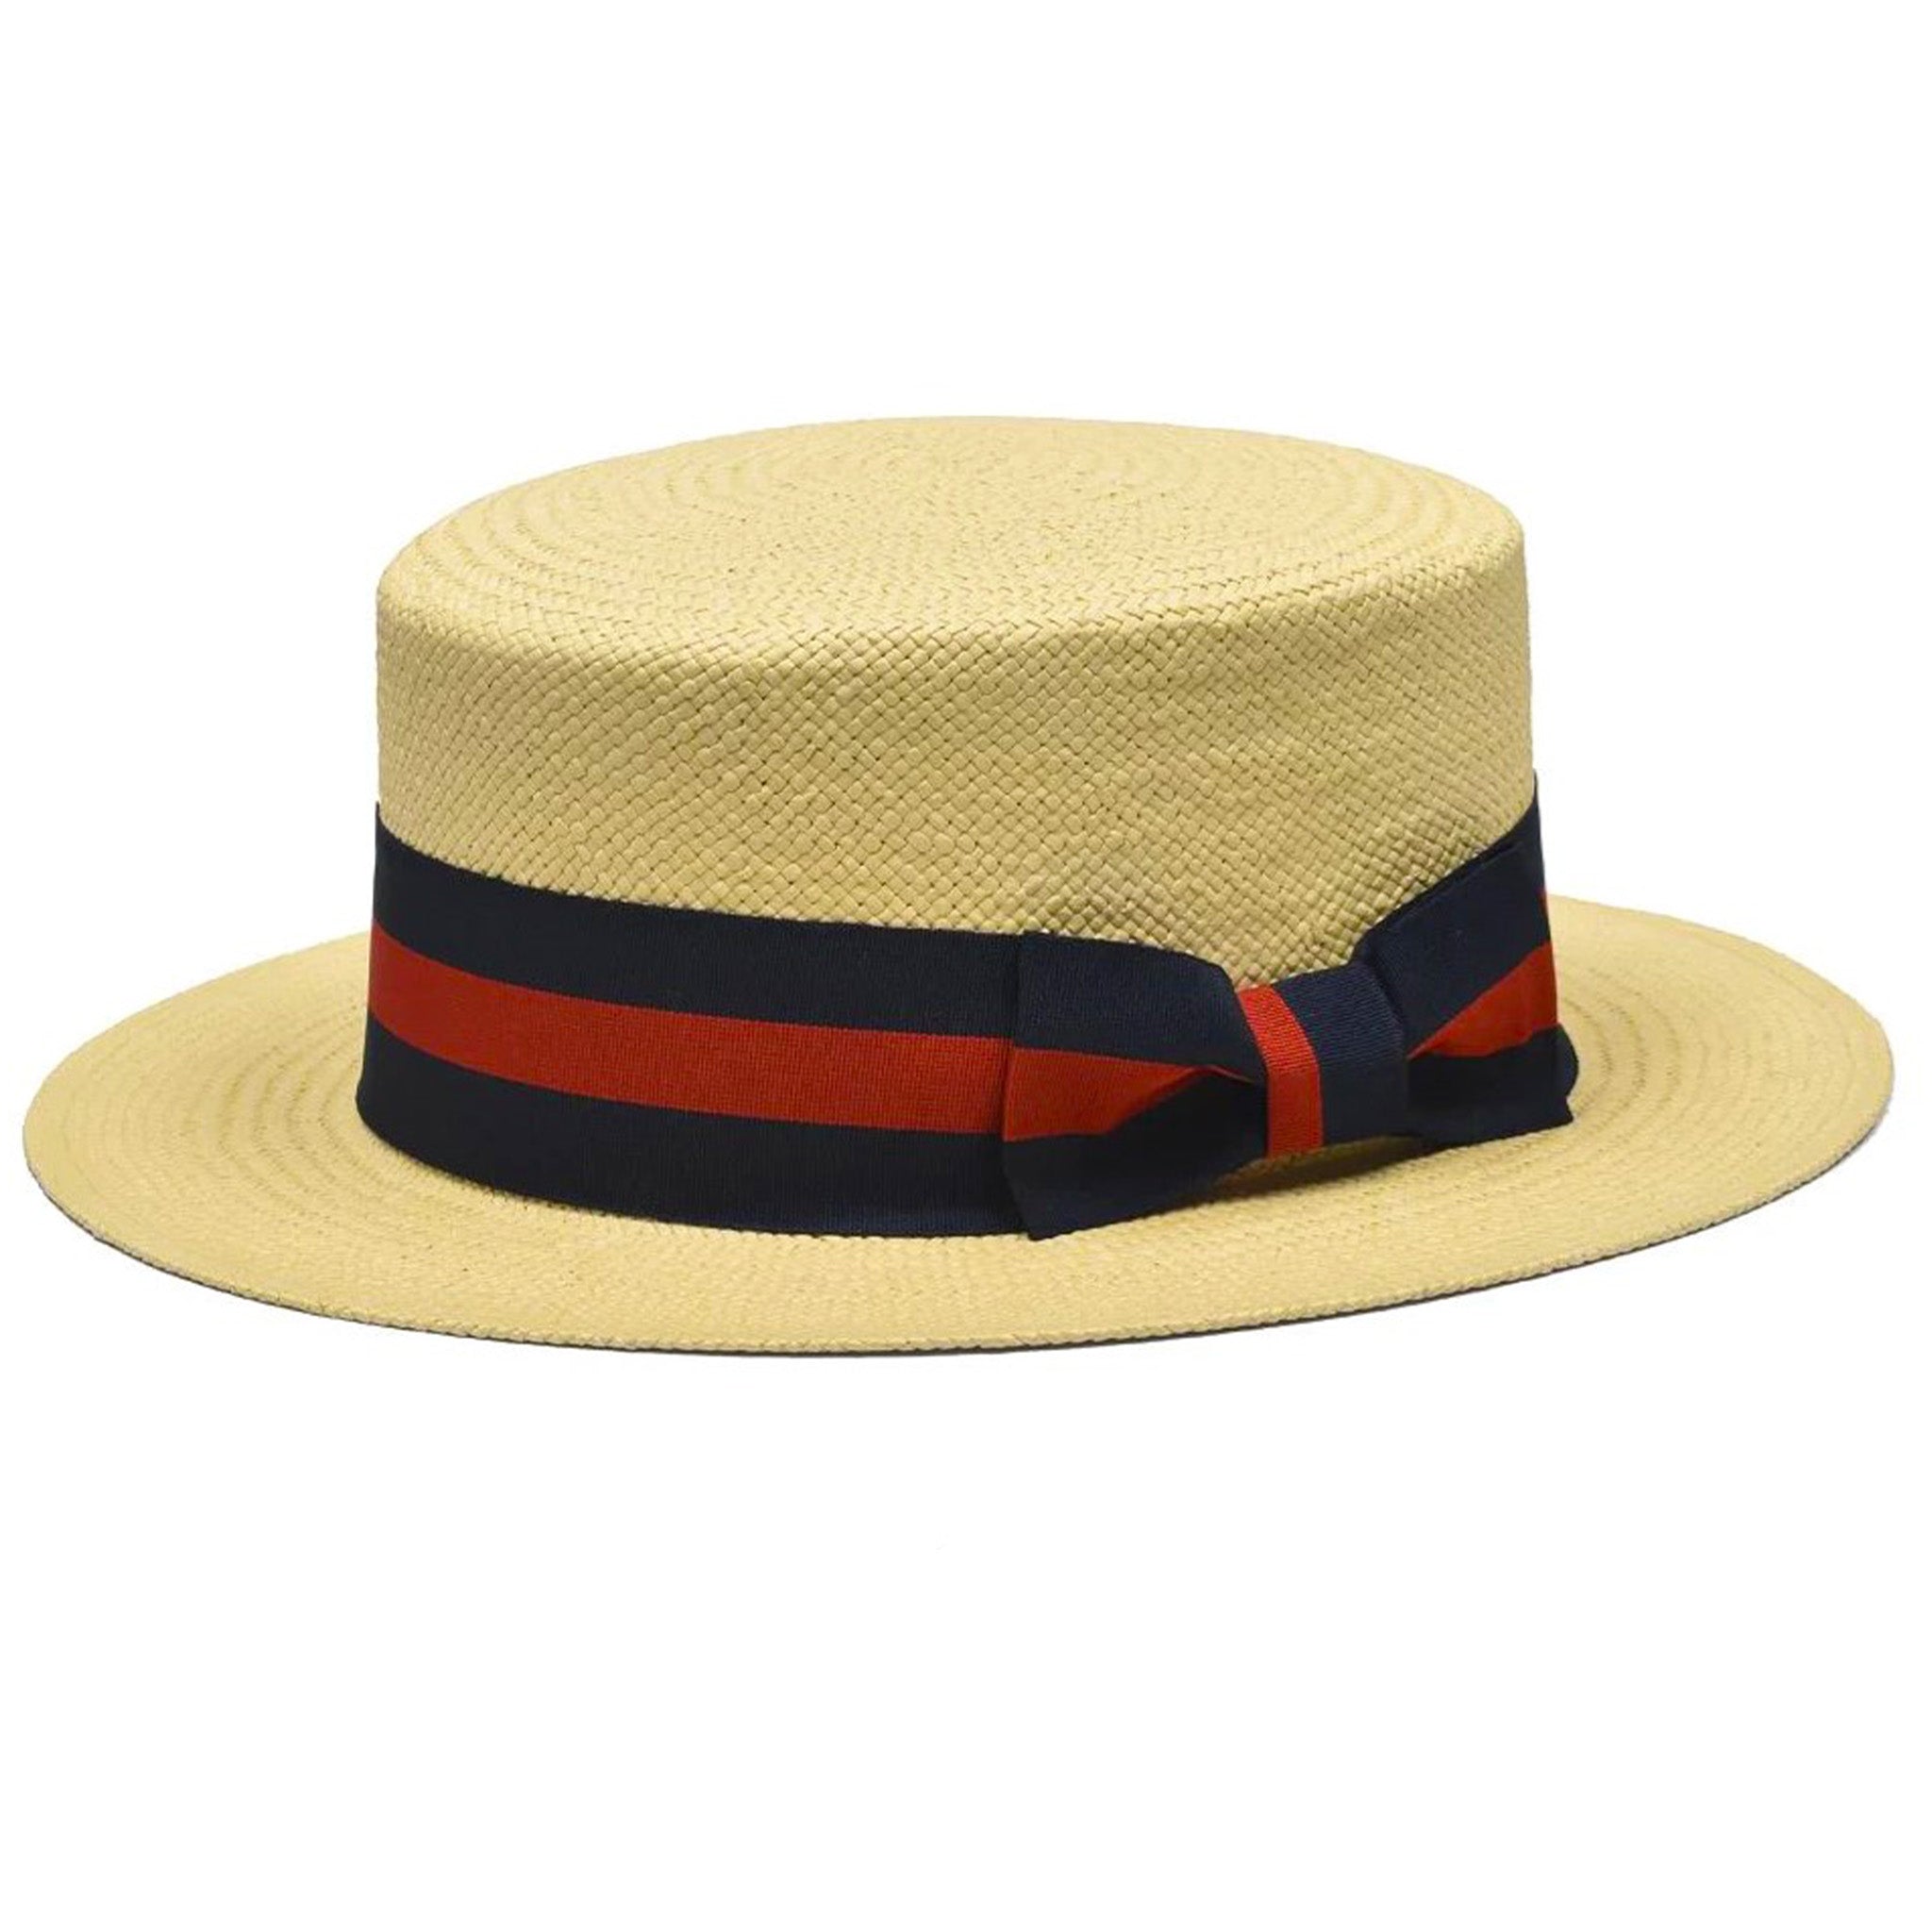 Italia Straw Boater Hat